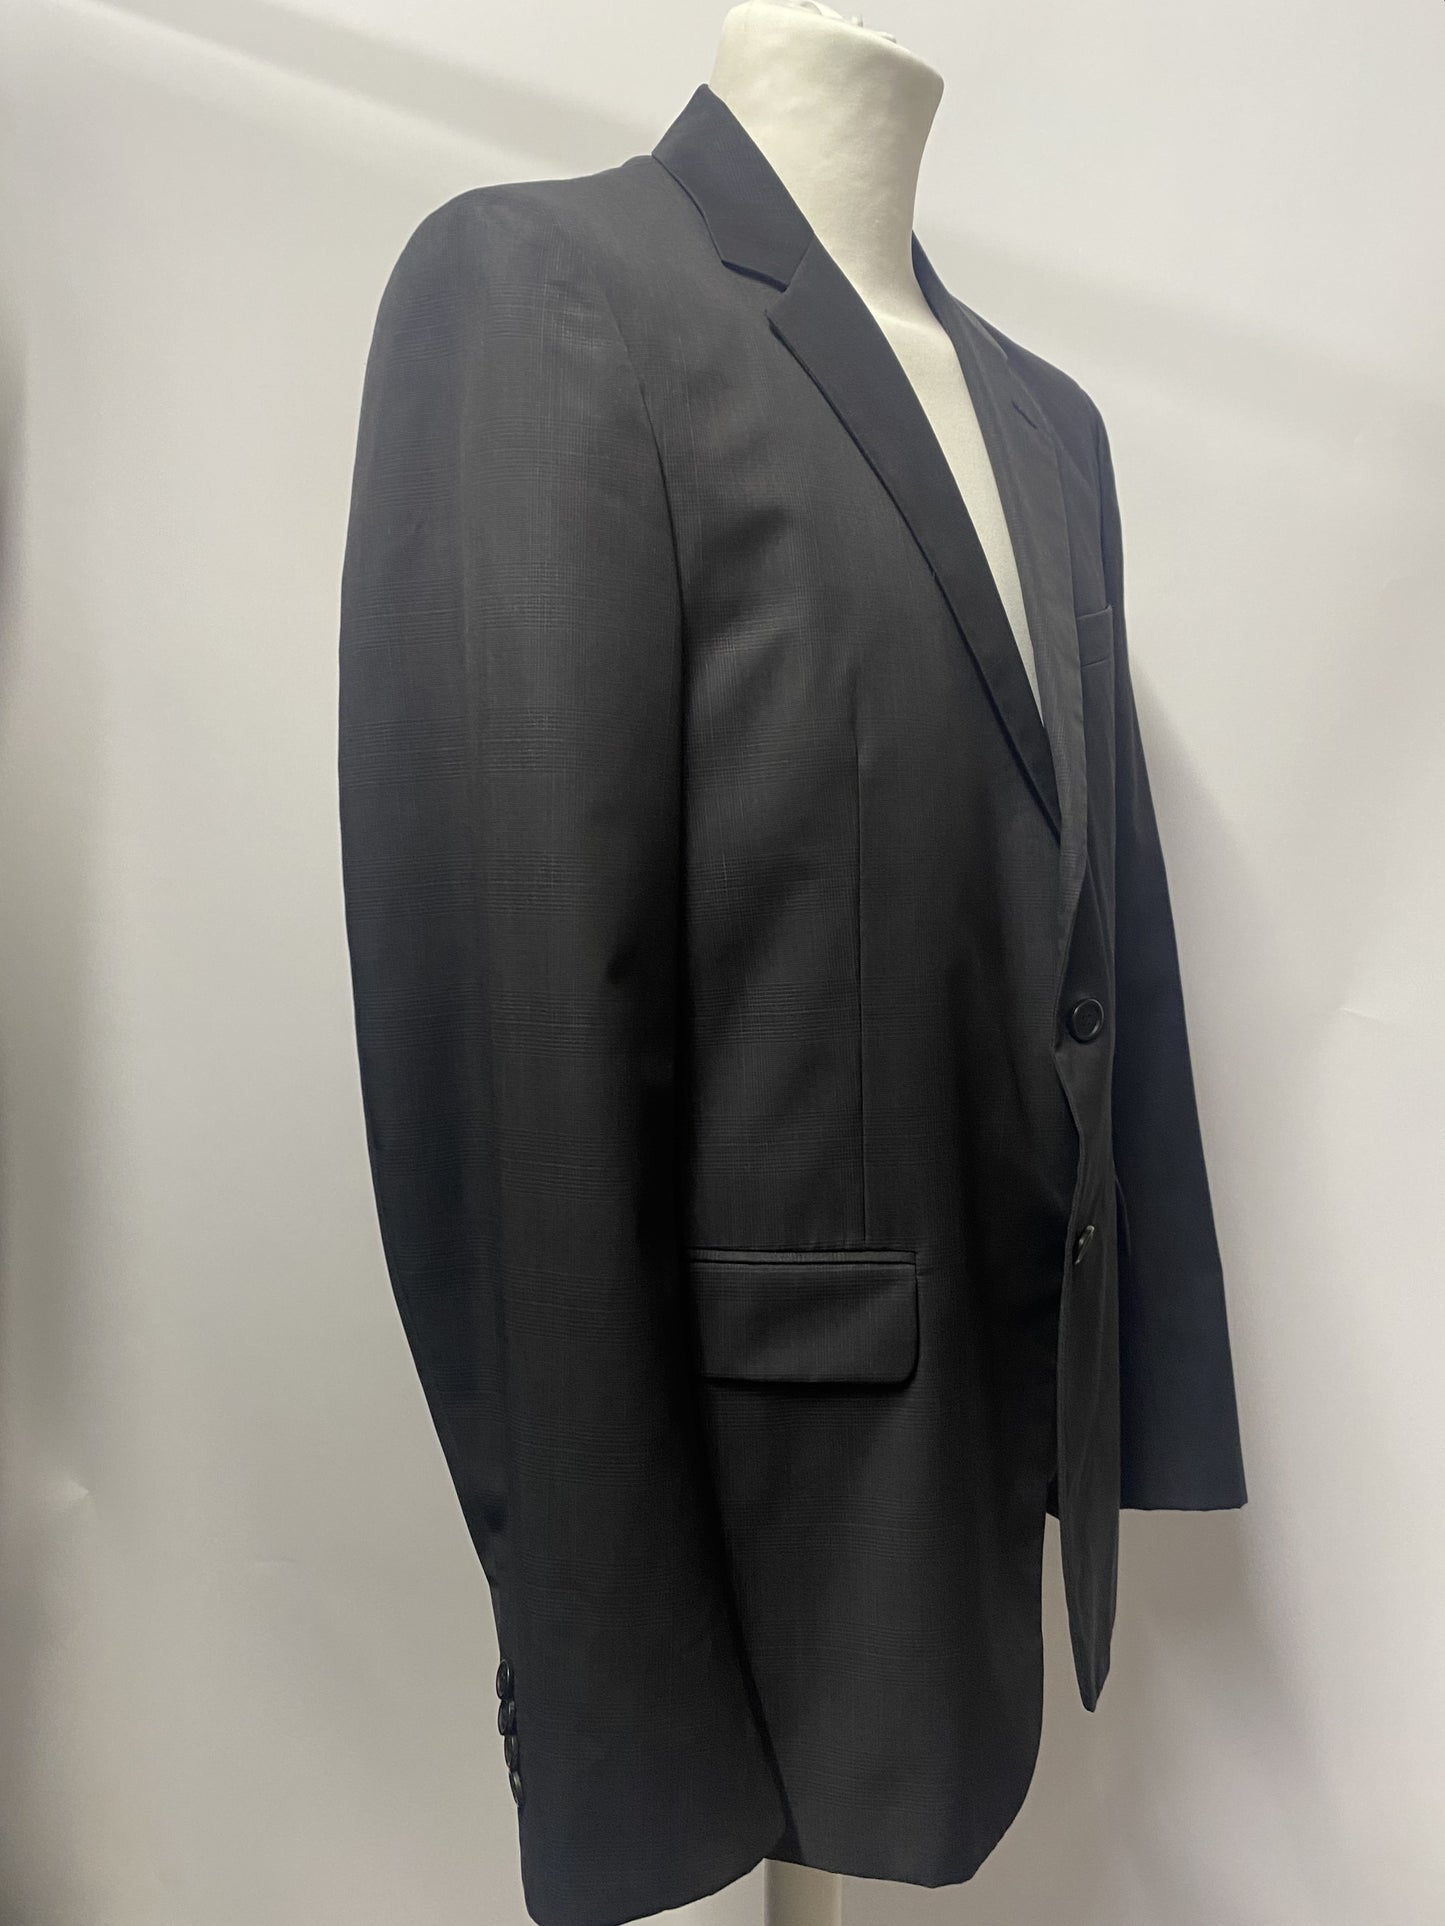 Prada Black Check Men's Suit Jacket 54R